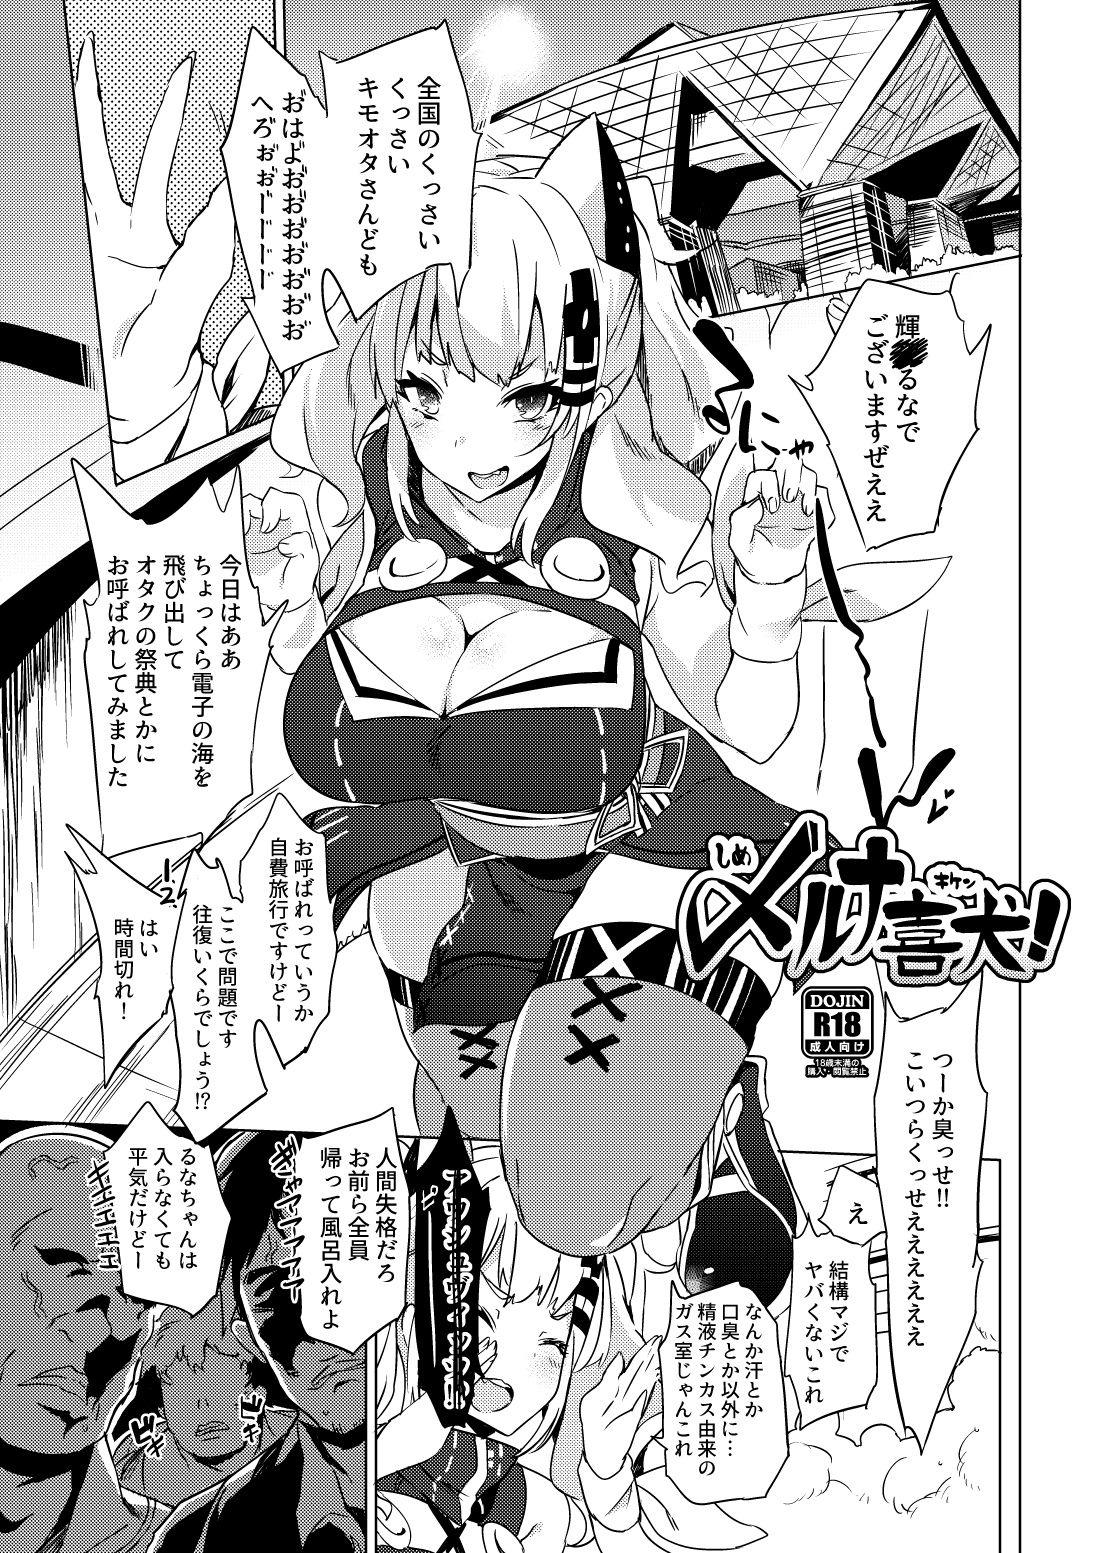 Hardcore Fuyu Comi no Omake Manga Virgin - Picture 1